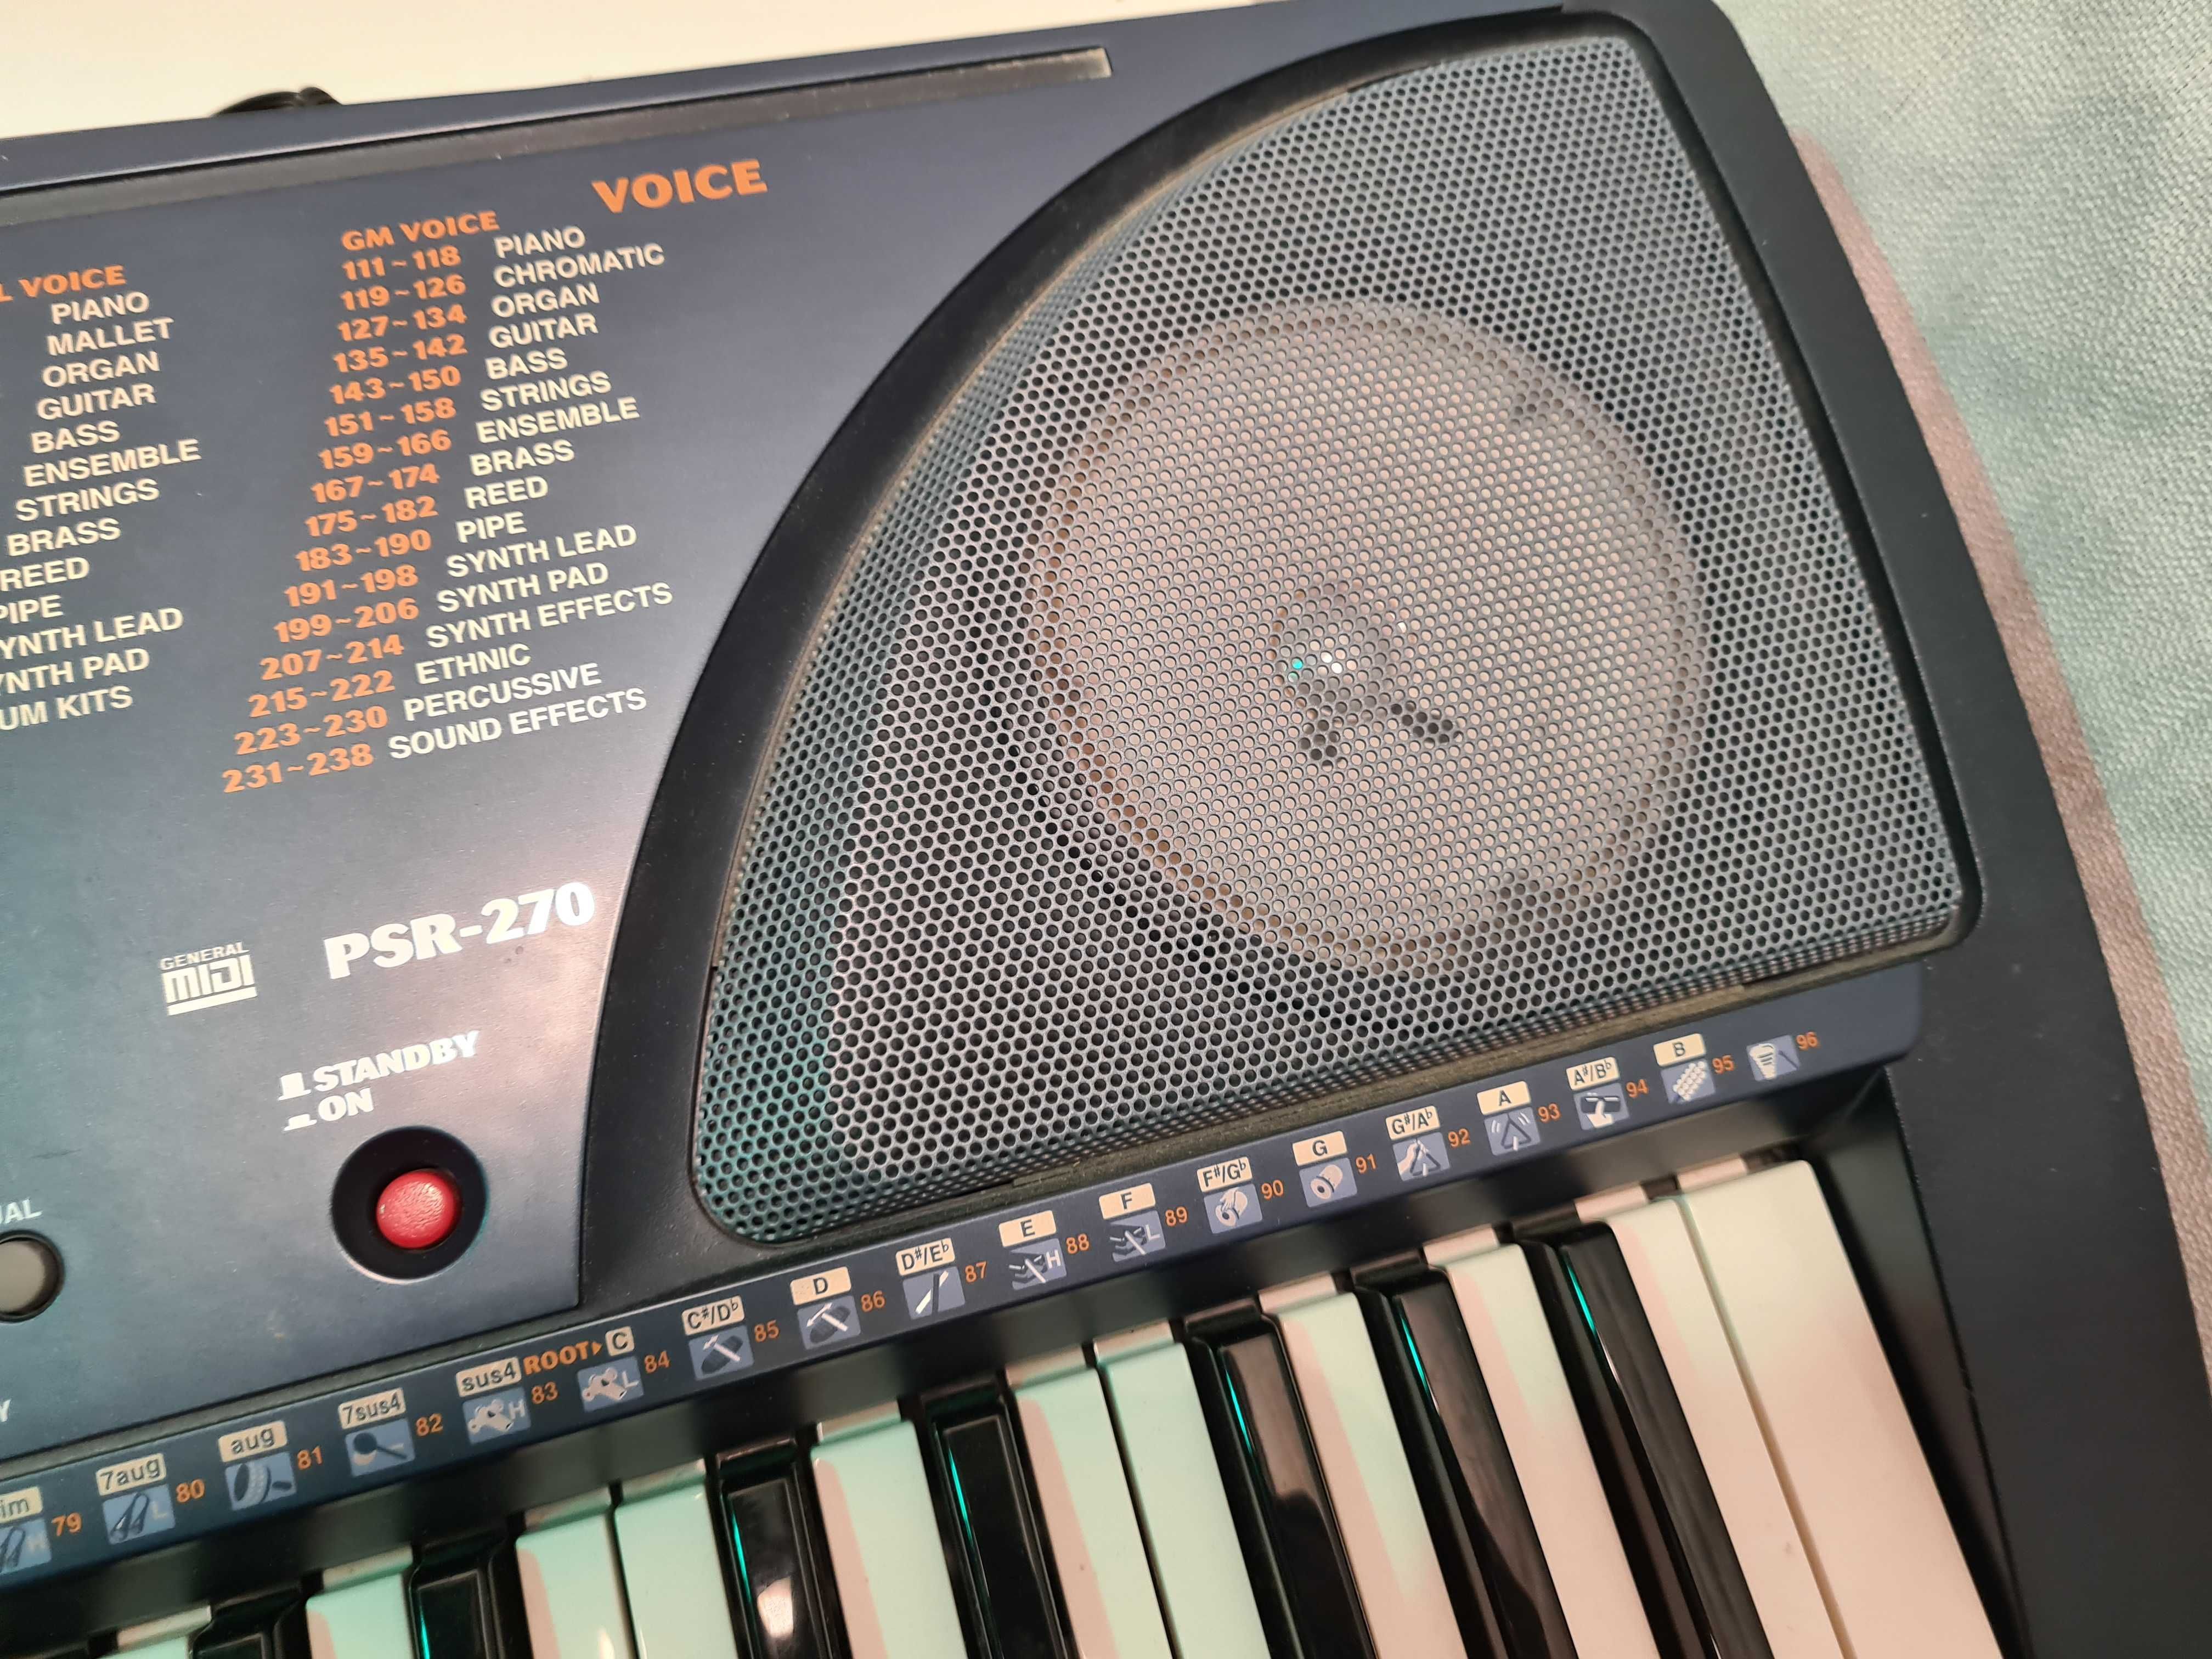 Clapa orga synth Yamaha PSR-270